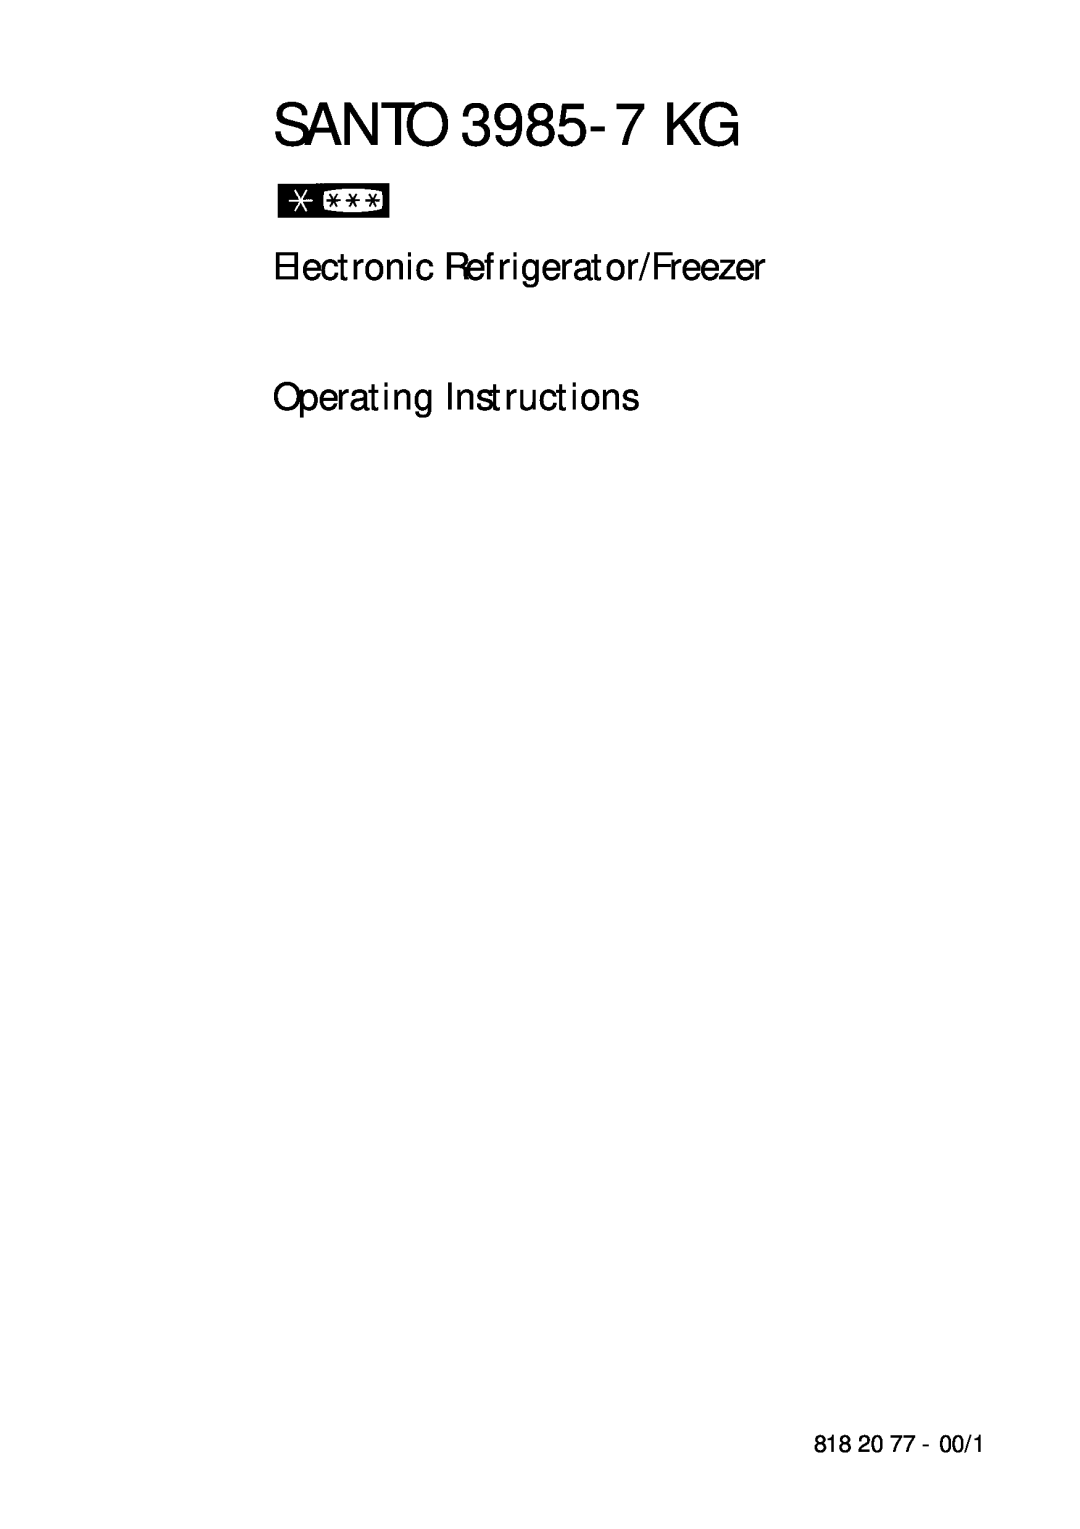 Electrolux manual SANTO 3985-7 KG, Electronic Refrigerator/Freezer Operating Instructions 